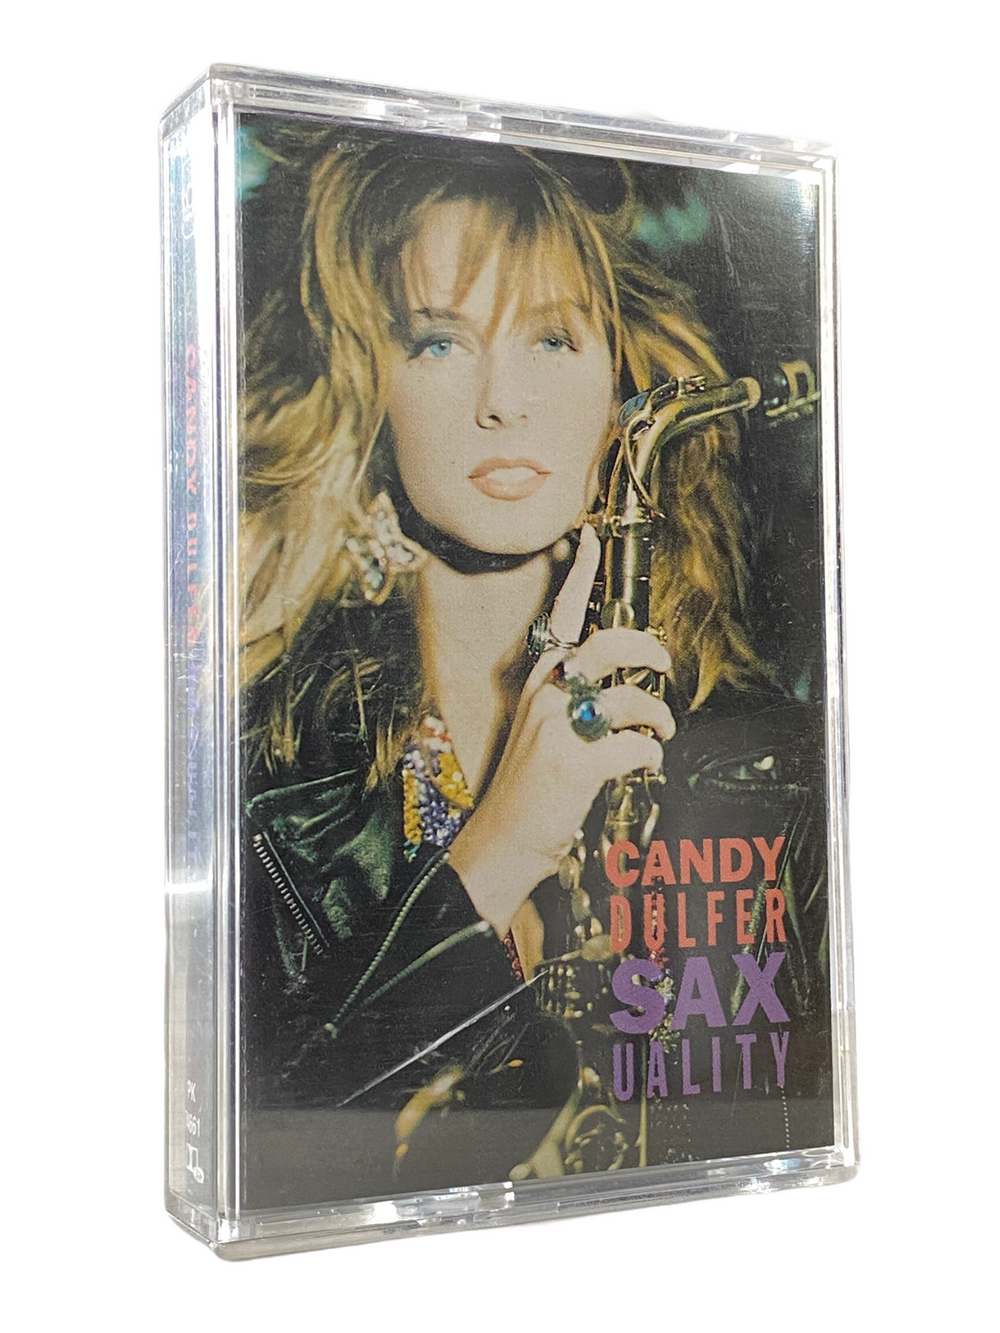 Candy Dulfer Saxuality Original Cassette Tape UK EU 1990 Release Prince